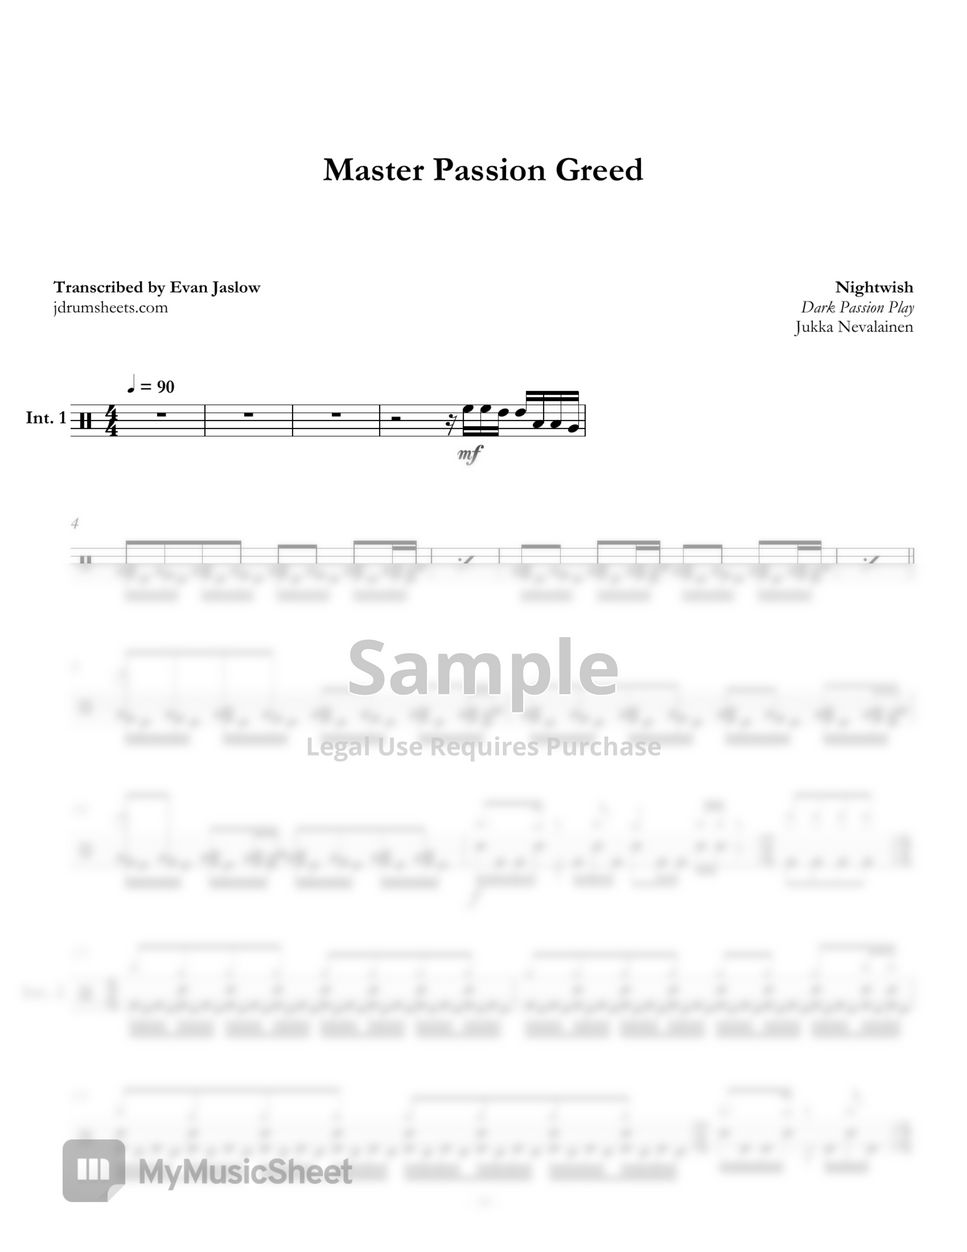 Nightwish Master Passion Greed Sheets By Evan Jaslow